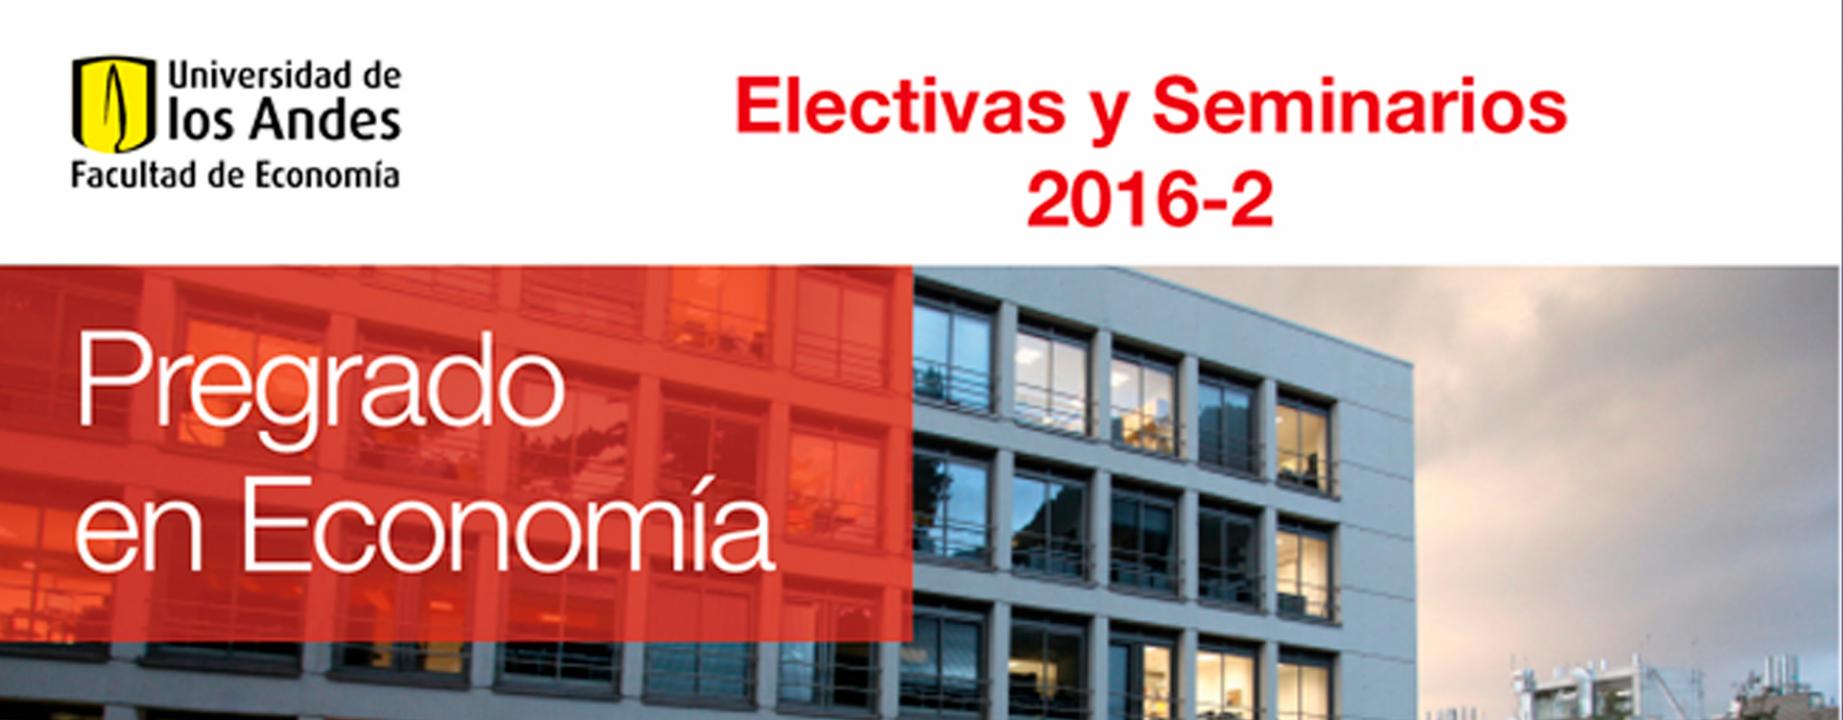 electivas-seminarios-2016-ii-banner